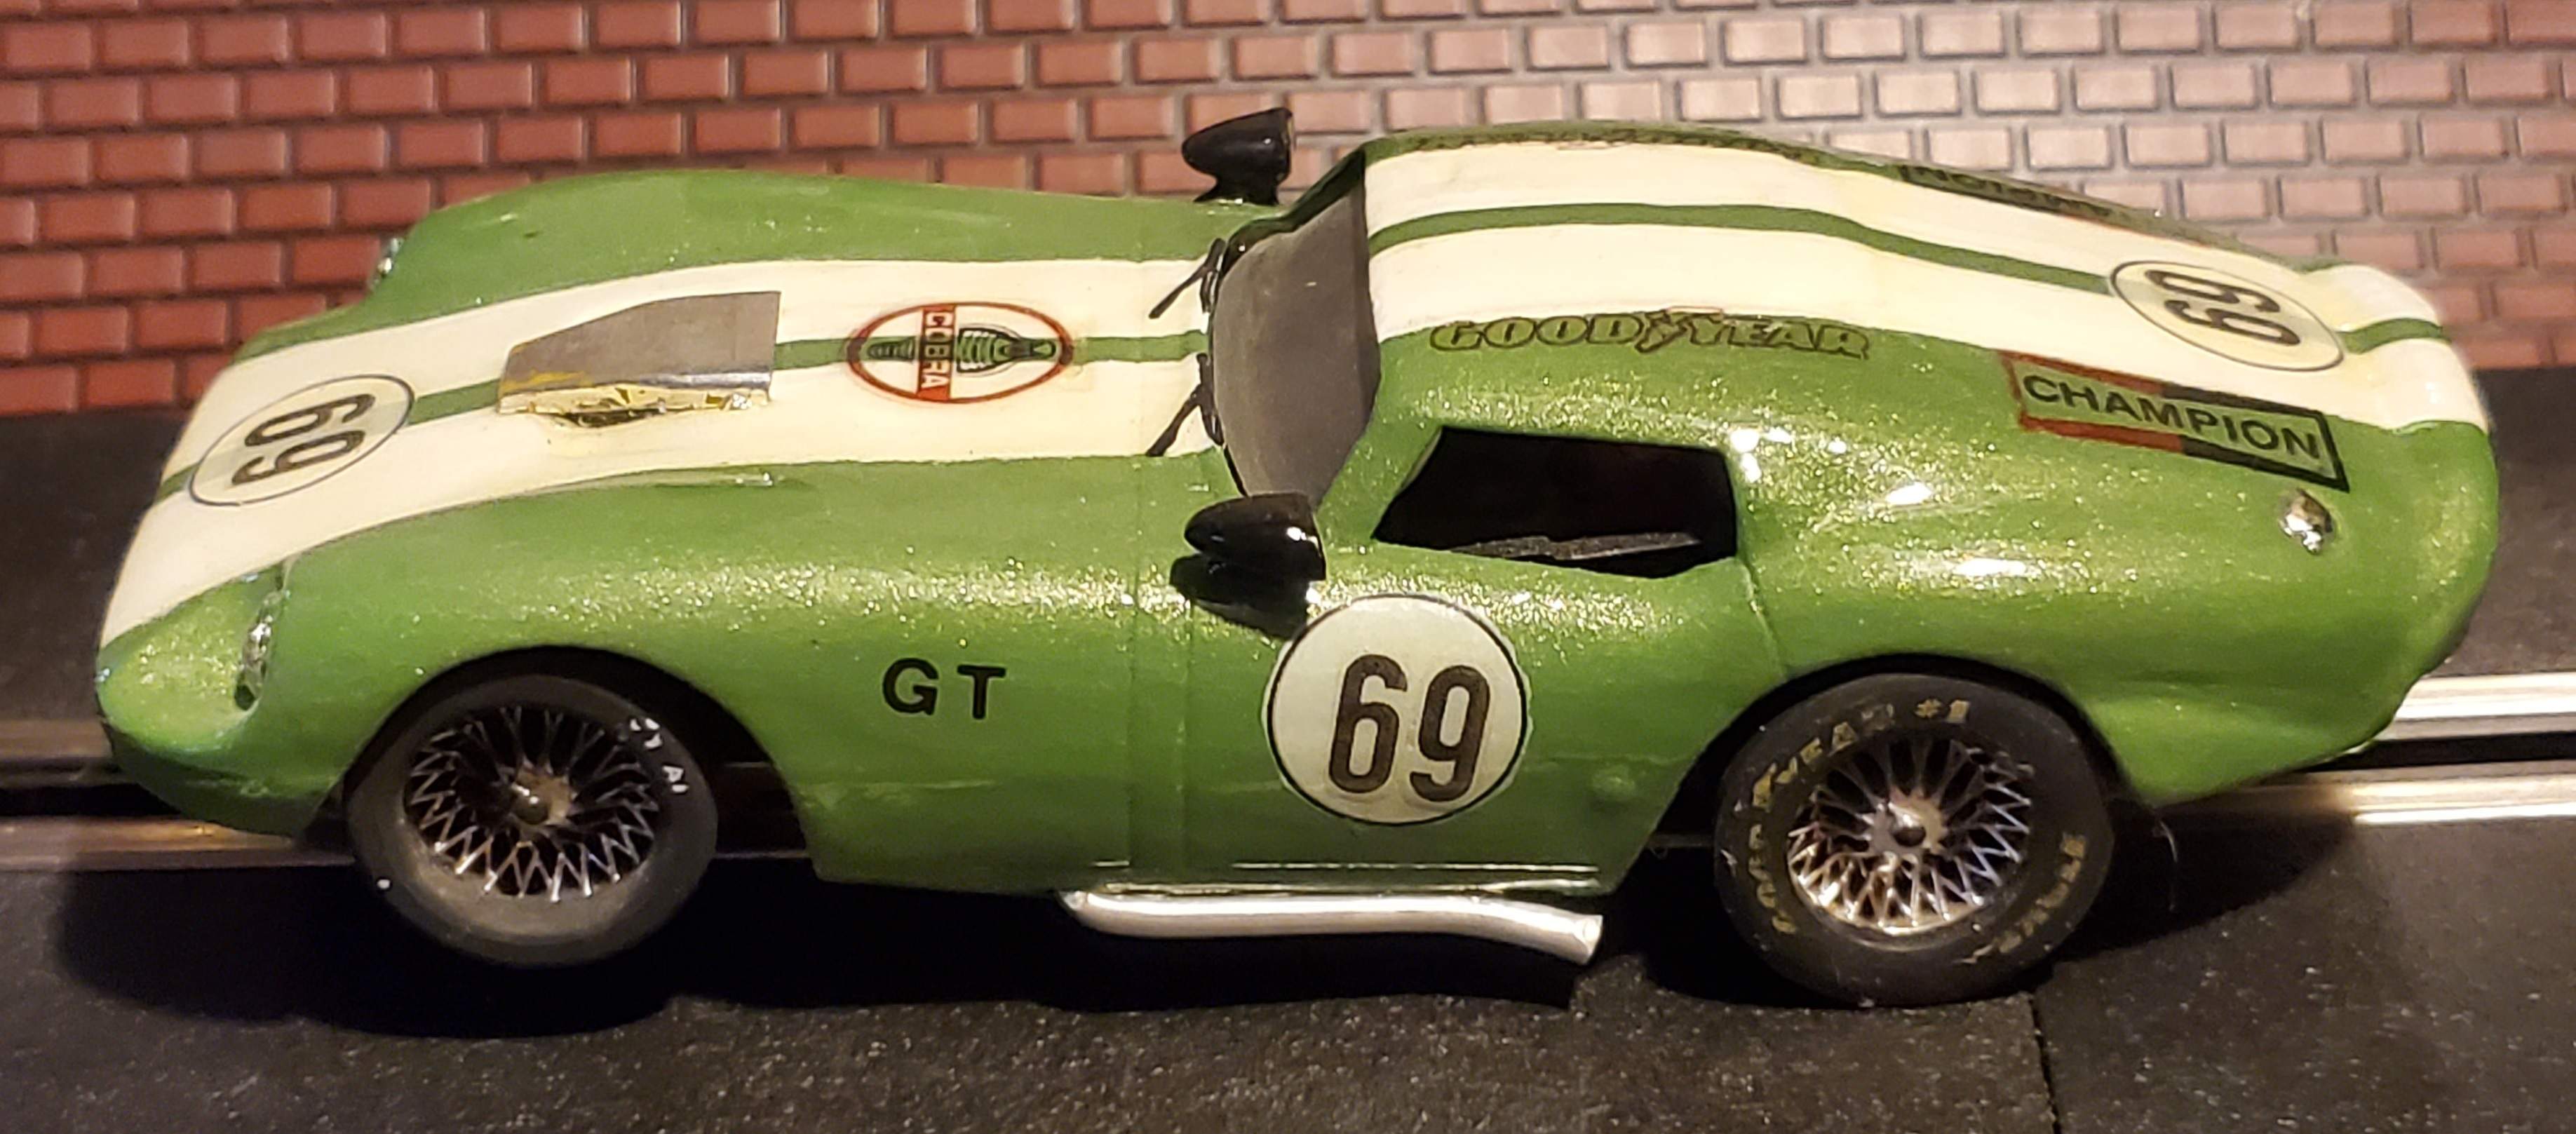 * Sale * Revell - Shelby Daytona Coupe - Green Car 69